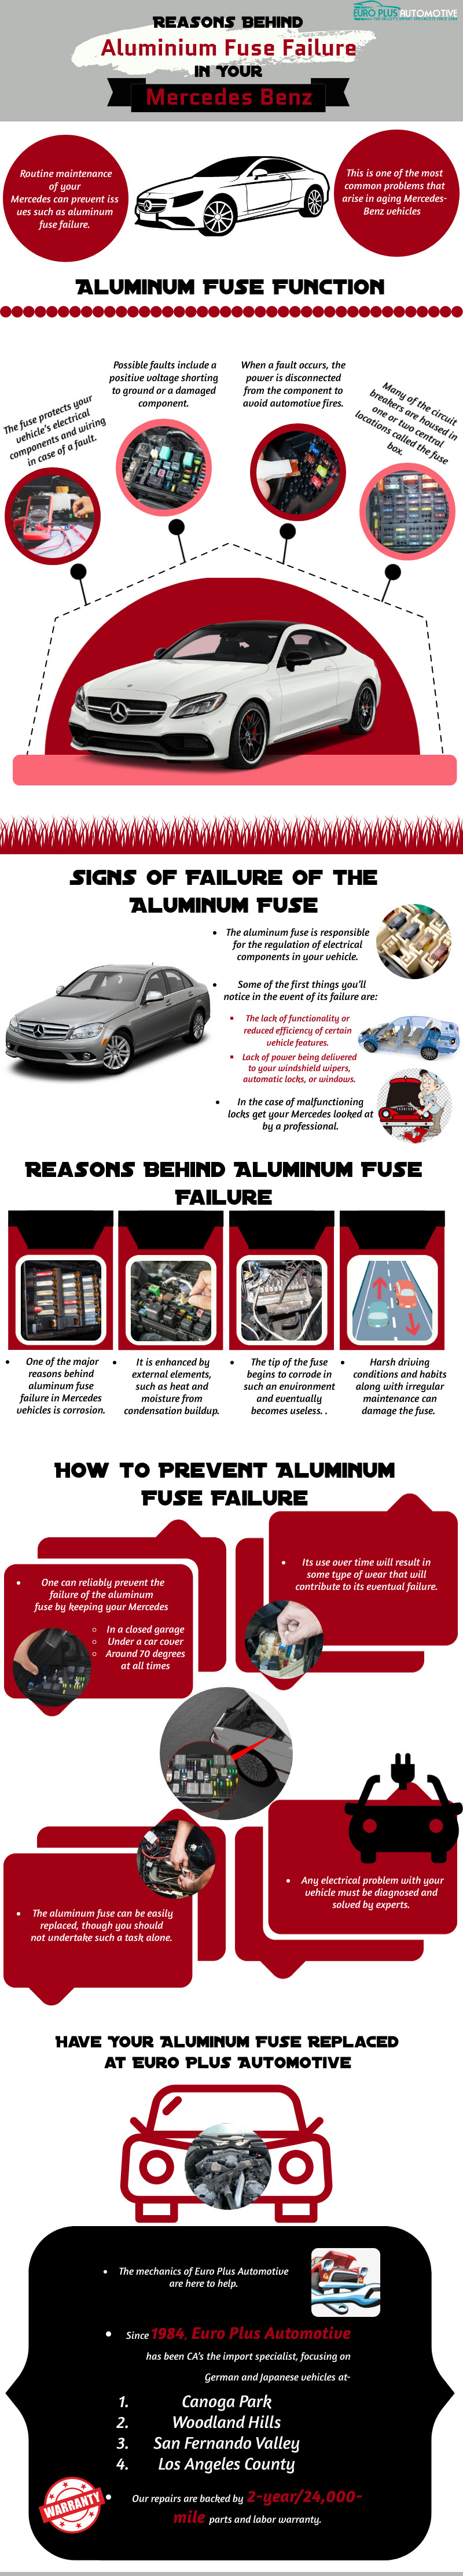 Mercedes Benz Aluminium Fuse Failure Reasons